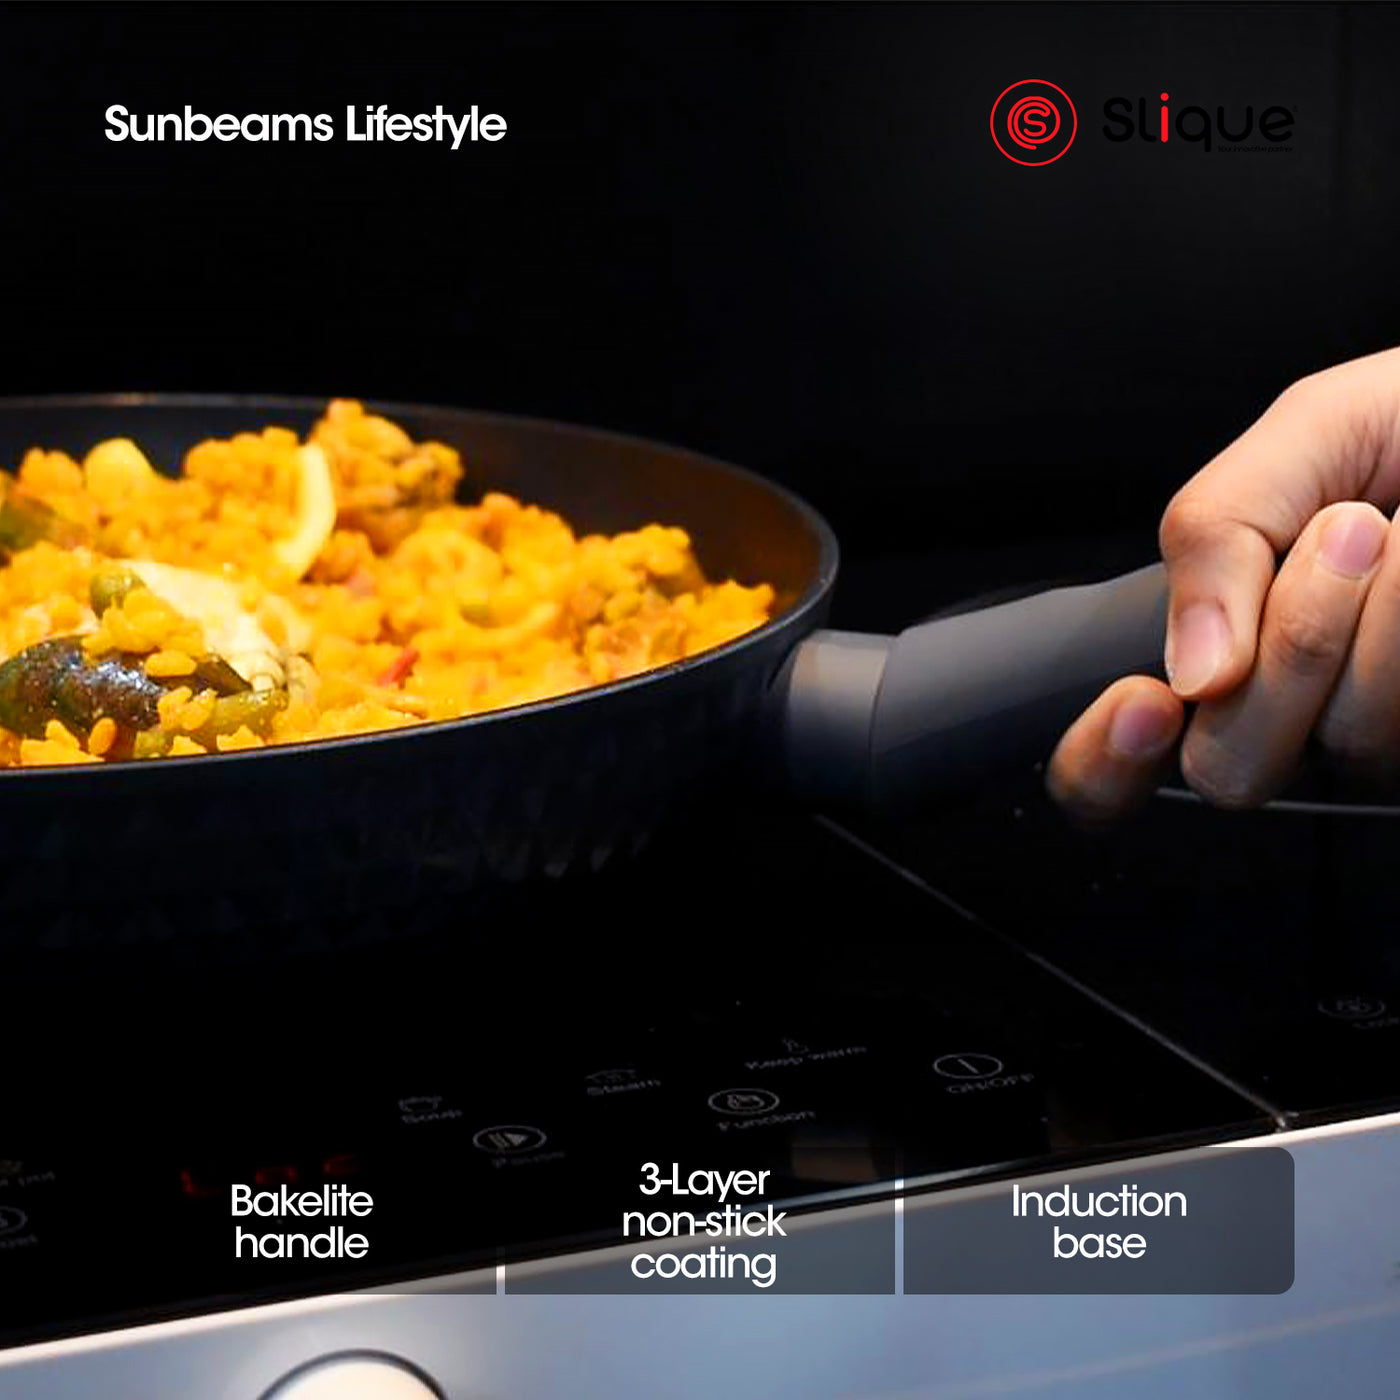 SLIQUE Premium Diamond Cookware Frypan 2 Layer Non-stick Coating 20cm